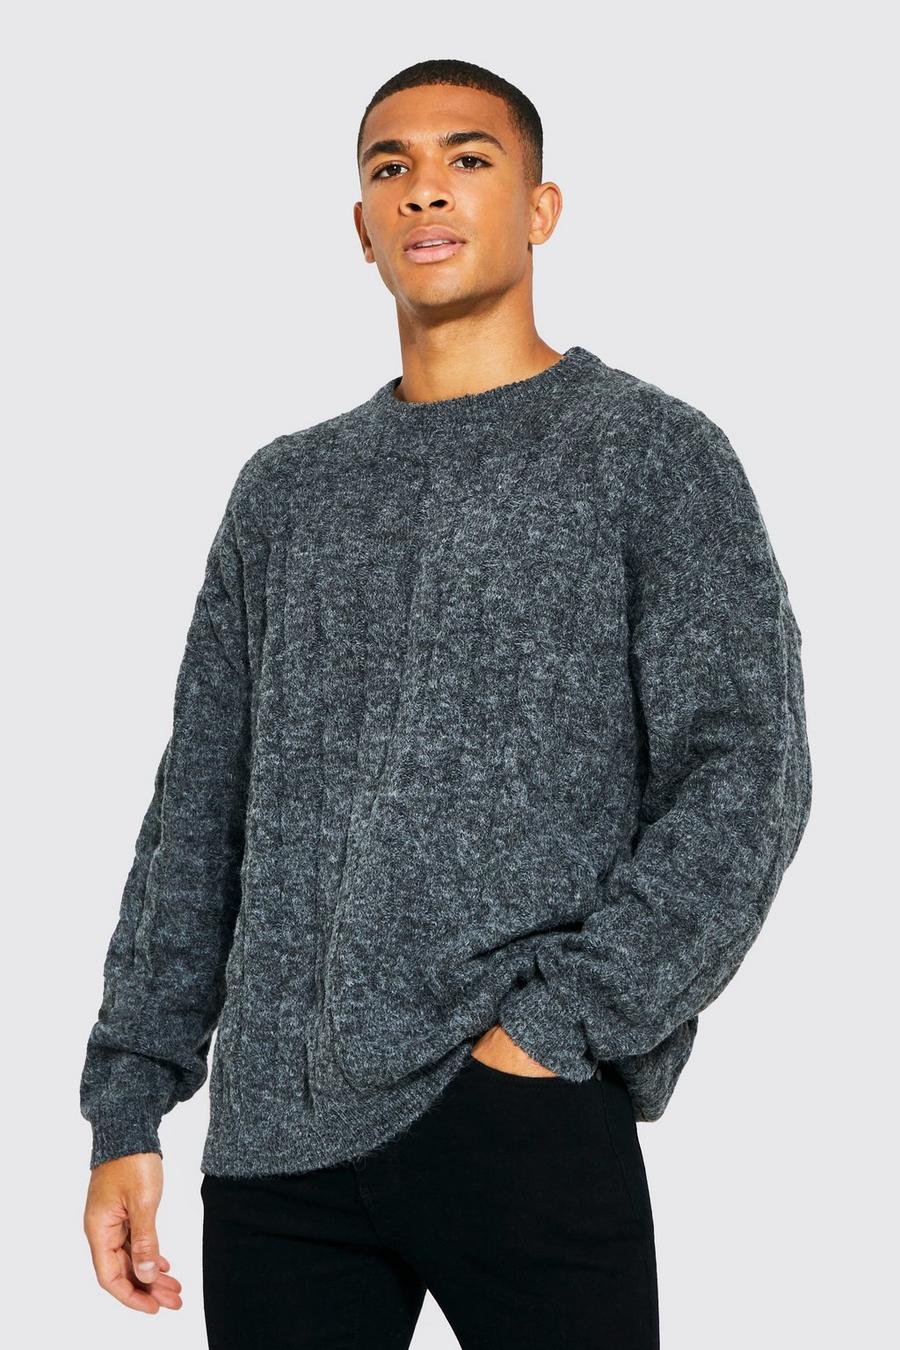 https://media.boohoo.com/i/boohoo/bmm11625_charcoal_xl/male-charcoal-oversized-cable-brushed-yarn-knitted-jumper/?w=900&qlt=default&fmt.jp2.qlt=70&fmt=auto&sm=fit